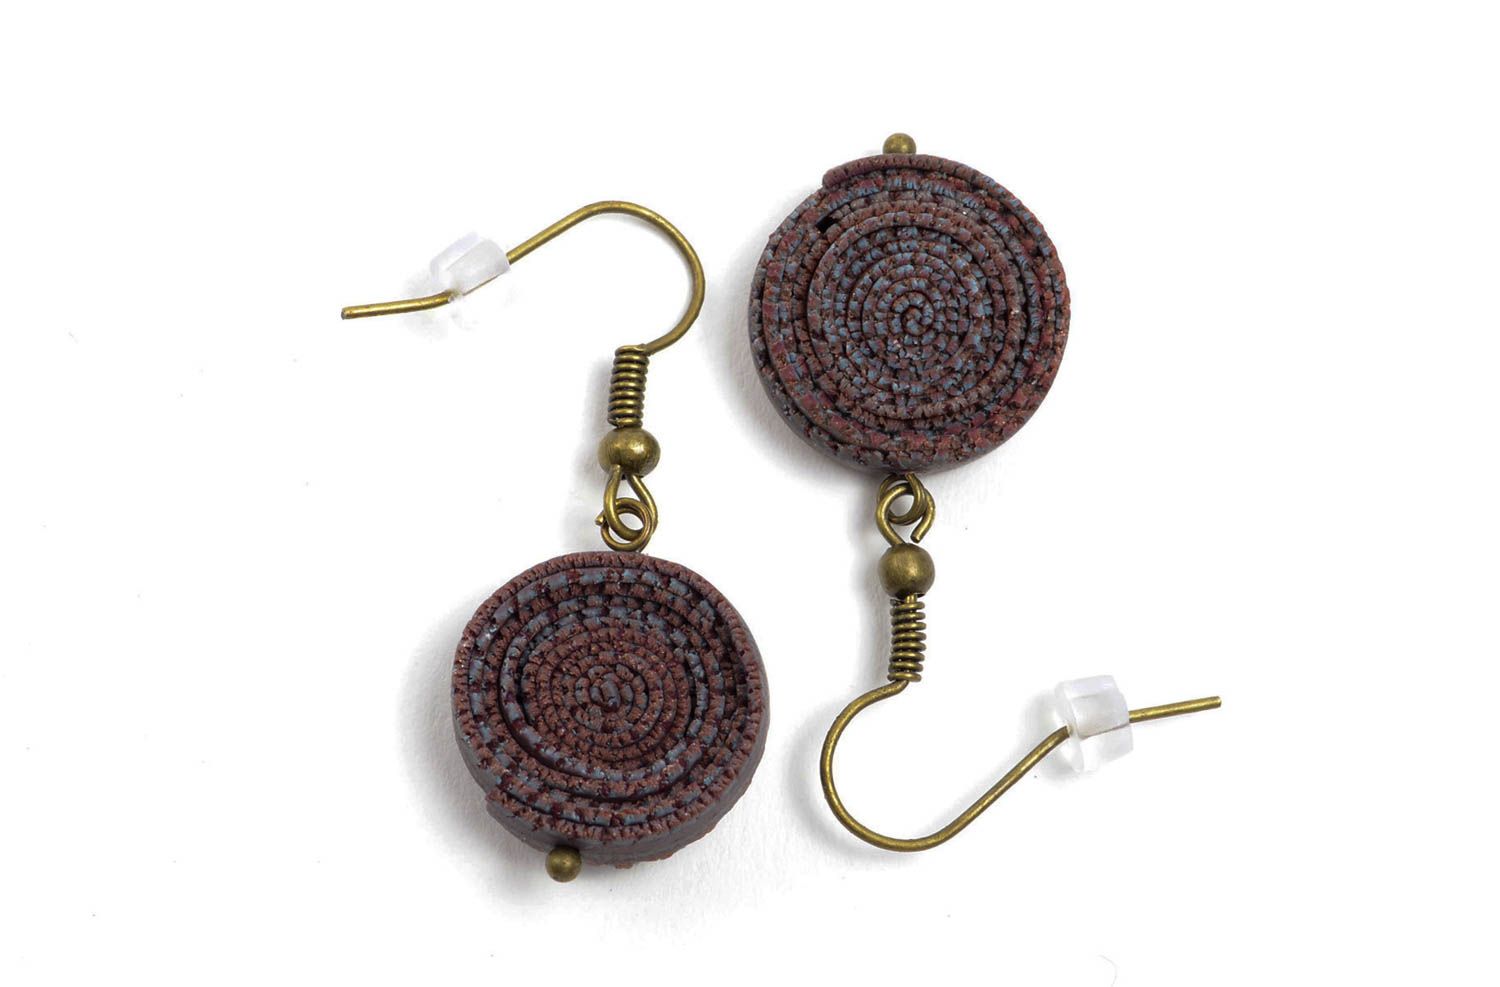 Plastic earrings flower earrings molded earrings with charms handmade jewelry photo 2